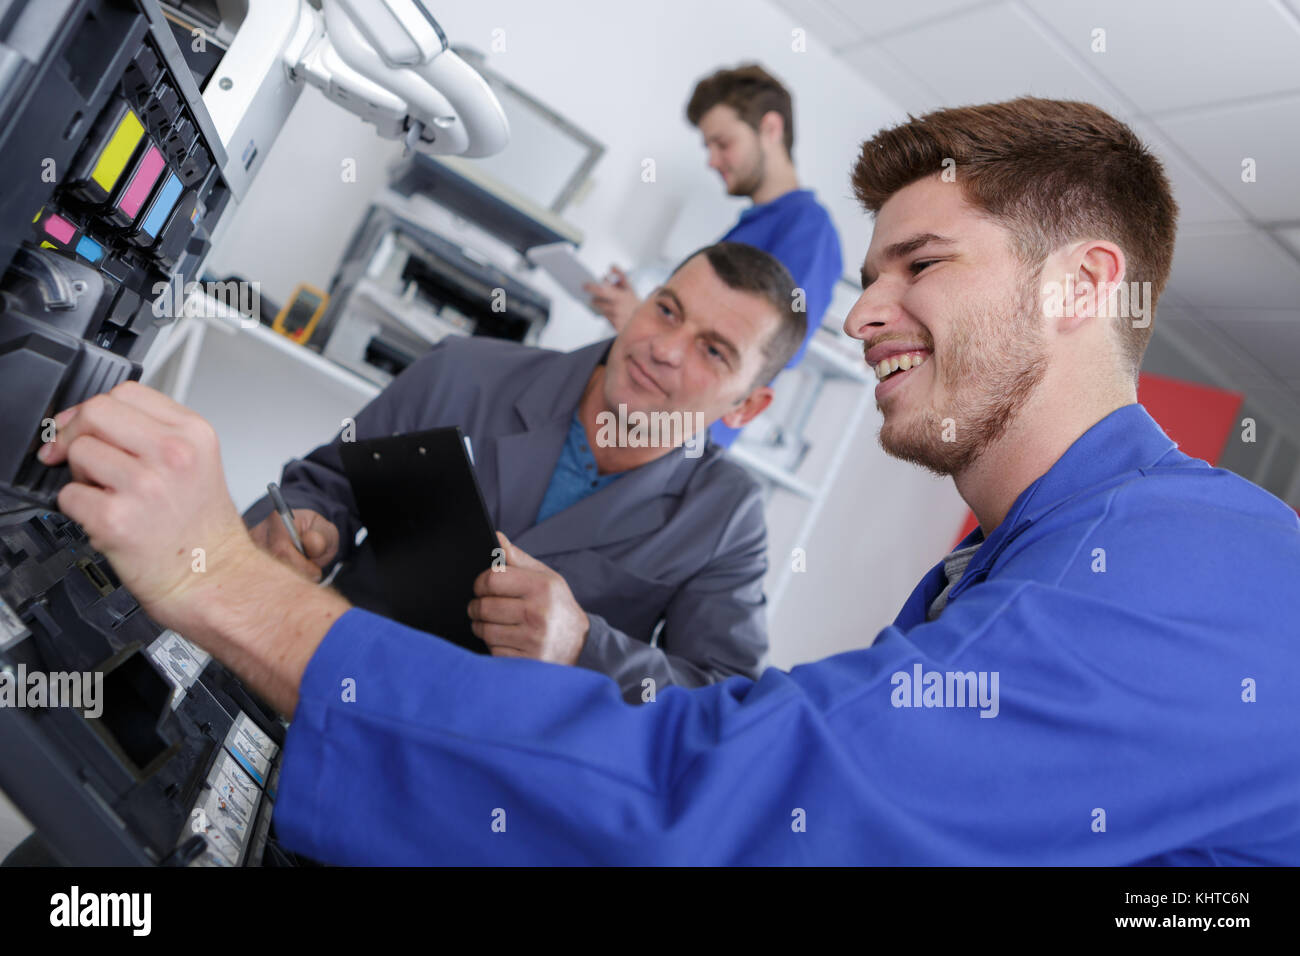 apprentice repairing printer with teacher monitoring Stock Photo